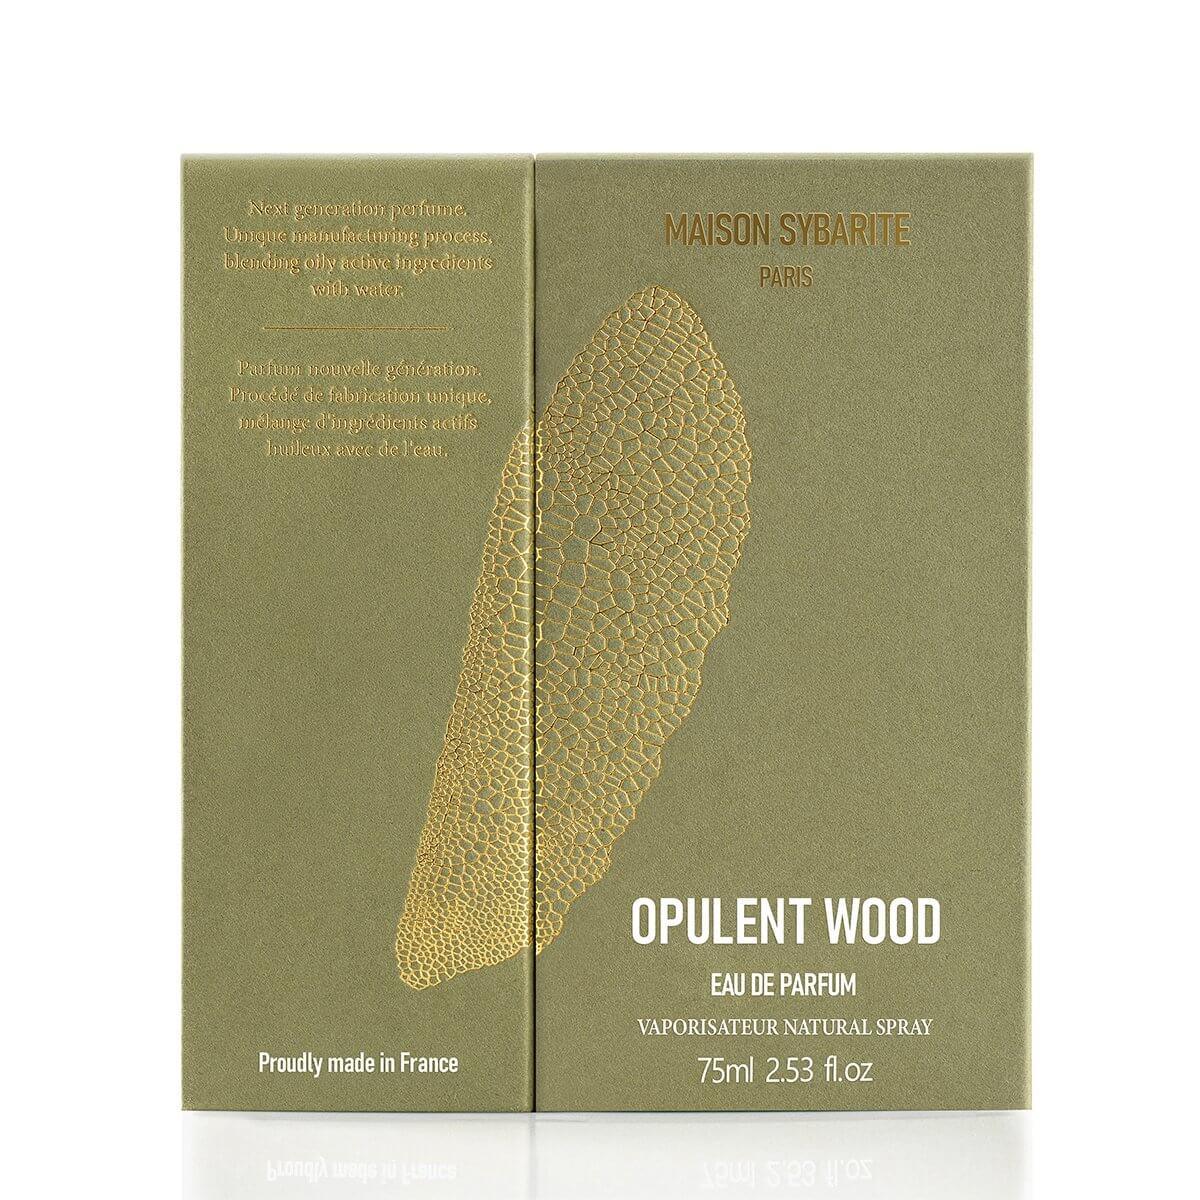 Opulent Wood box by Maison Sybarite is at Indigo Perfumery